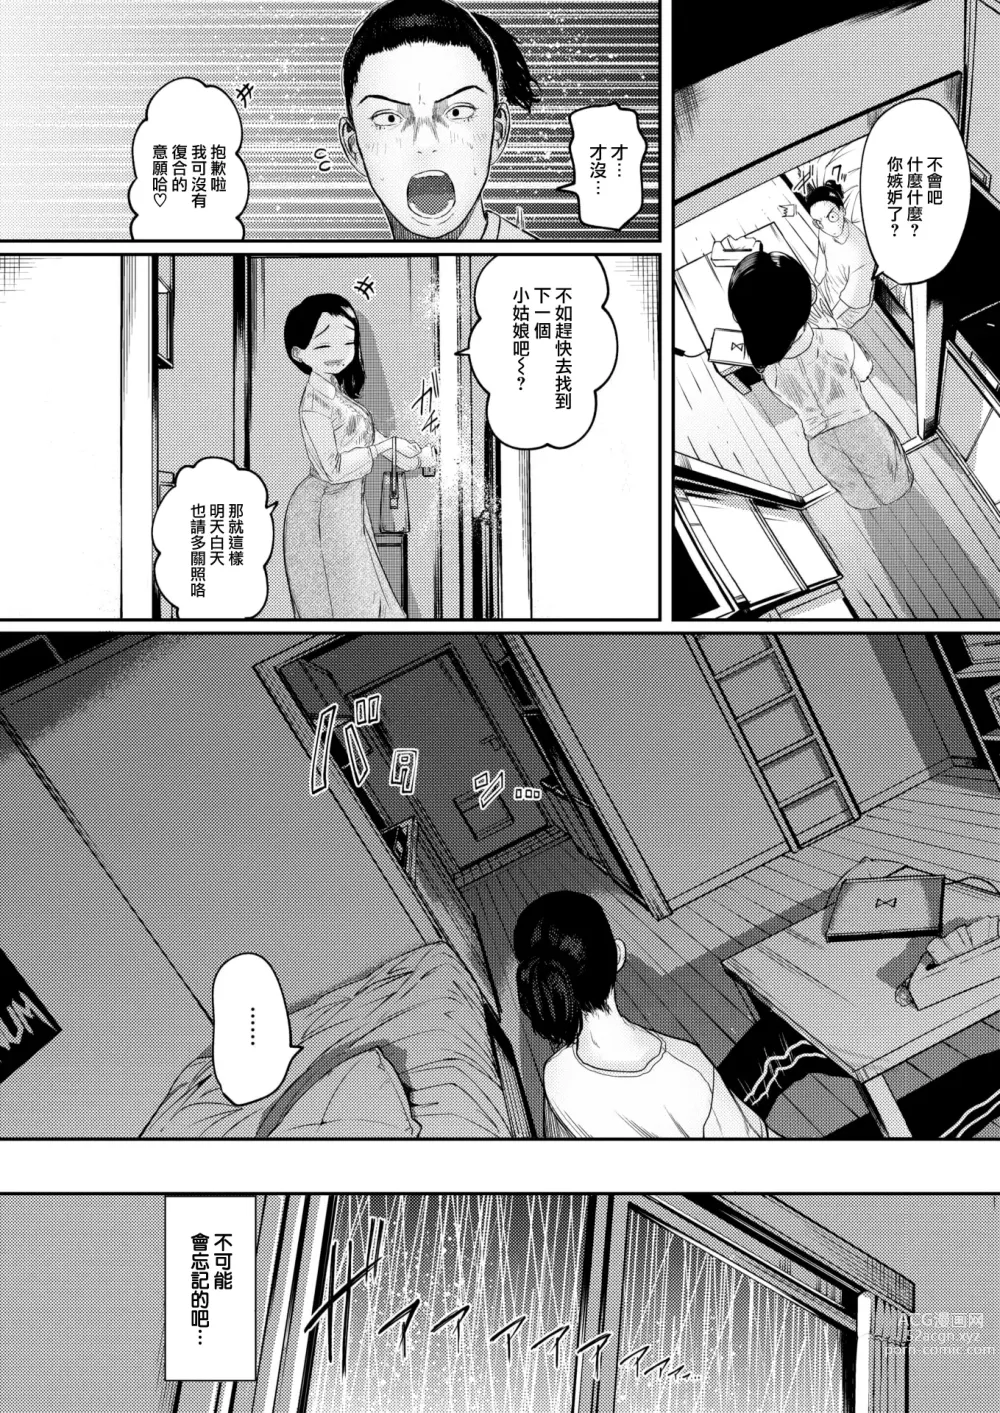 Page 8 of manga Ame ni Furarete Ji Katamaru - After a storm comes a love